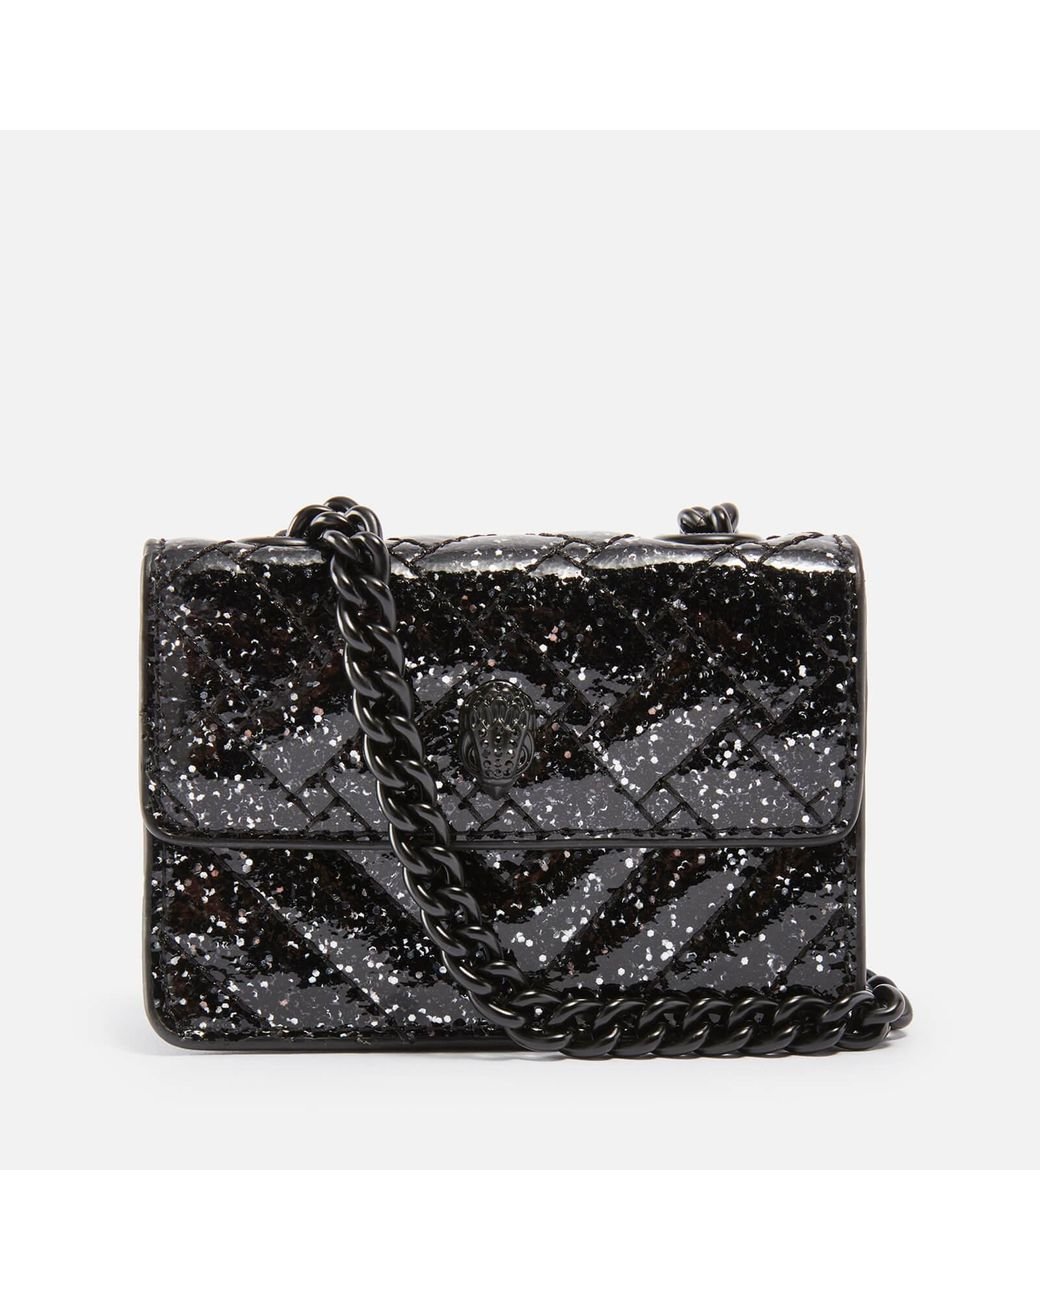 Kurt Geiger Micro Kensington Glittered Faux Leather Bag in Black